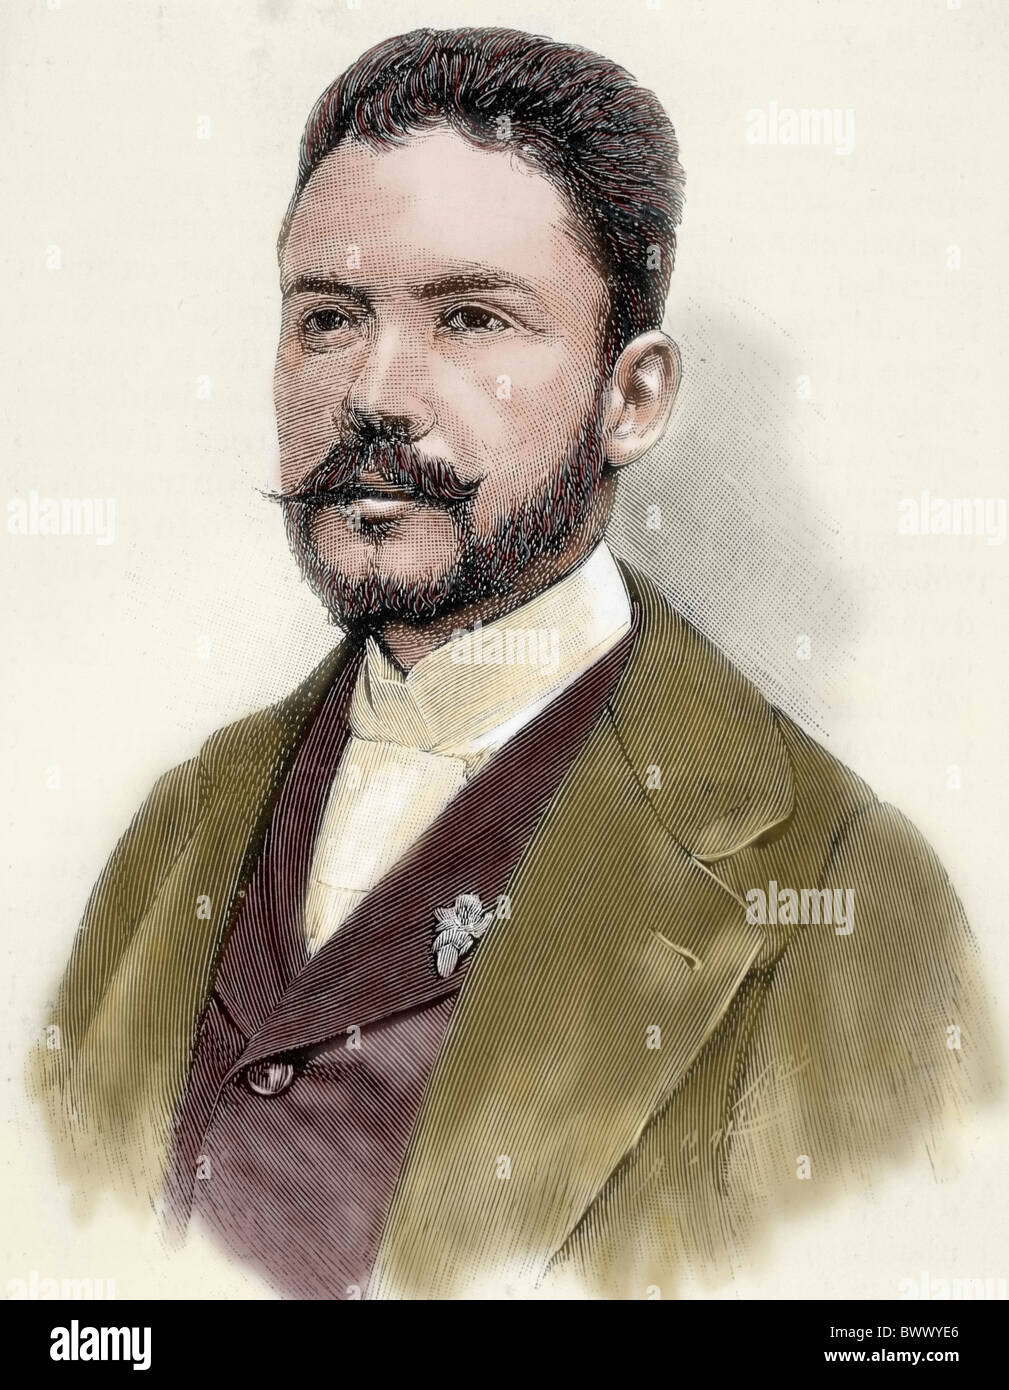 DARIO, Ruben (1867-1916). Nicaraguan poet. Engraving by Carretero. Colored. Stock Photo